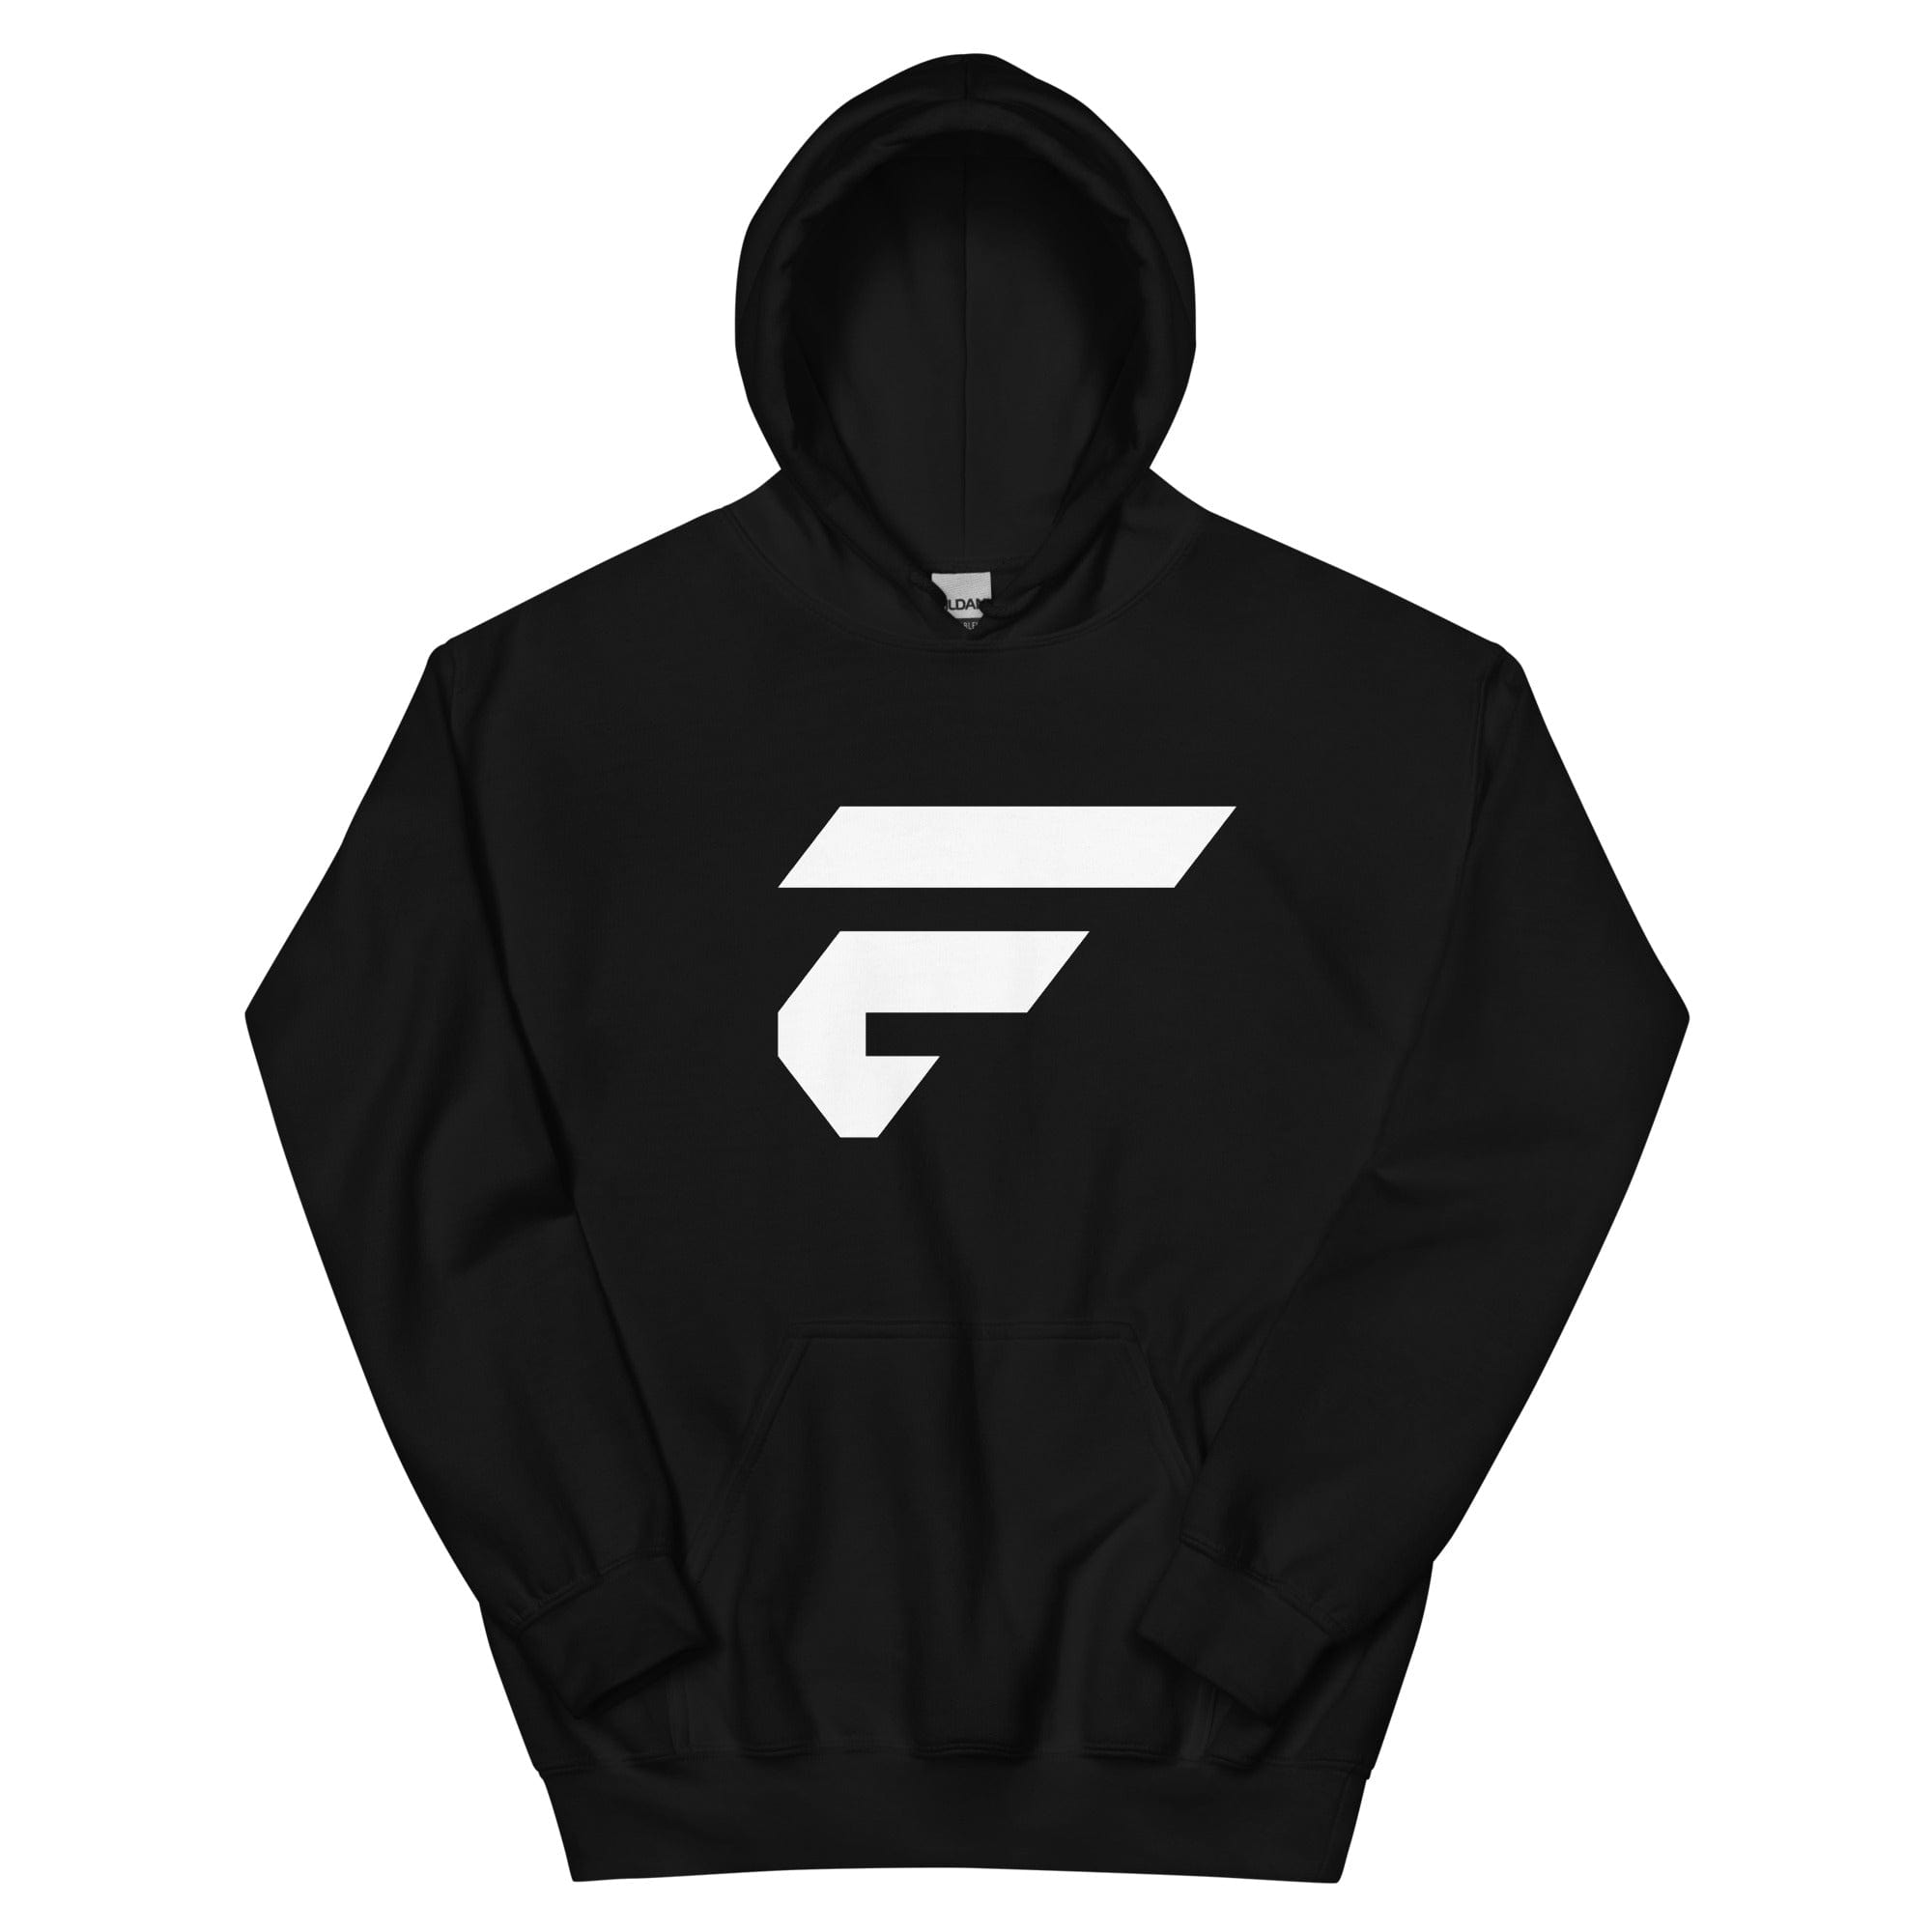 Black unisex cotton hoodie with Fire Cornhole F logo in white